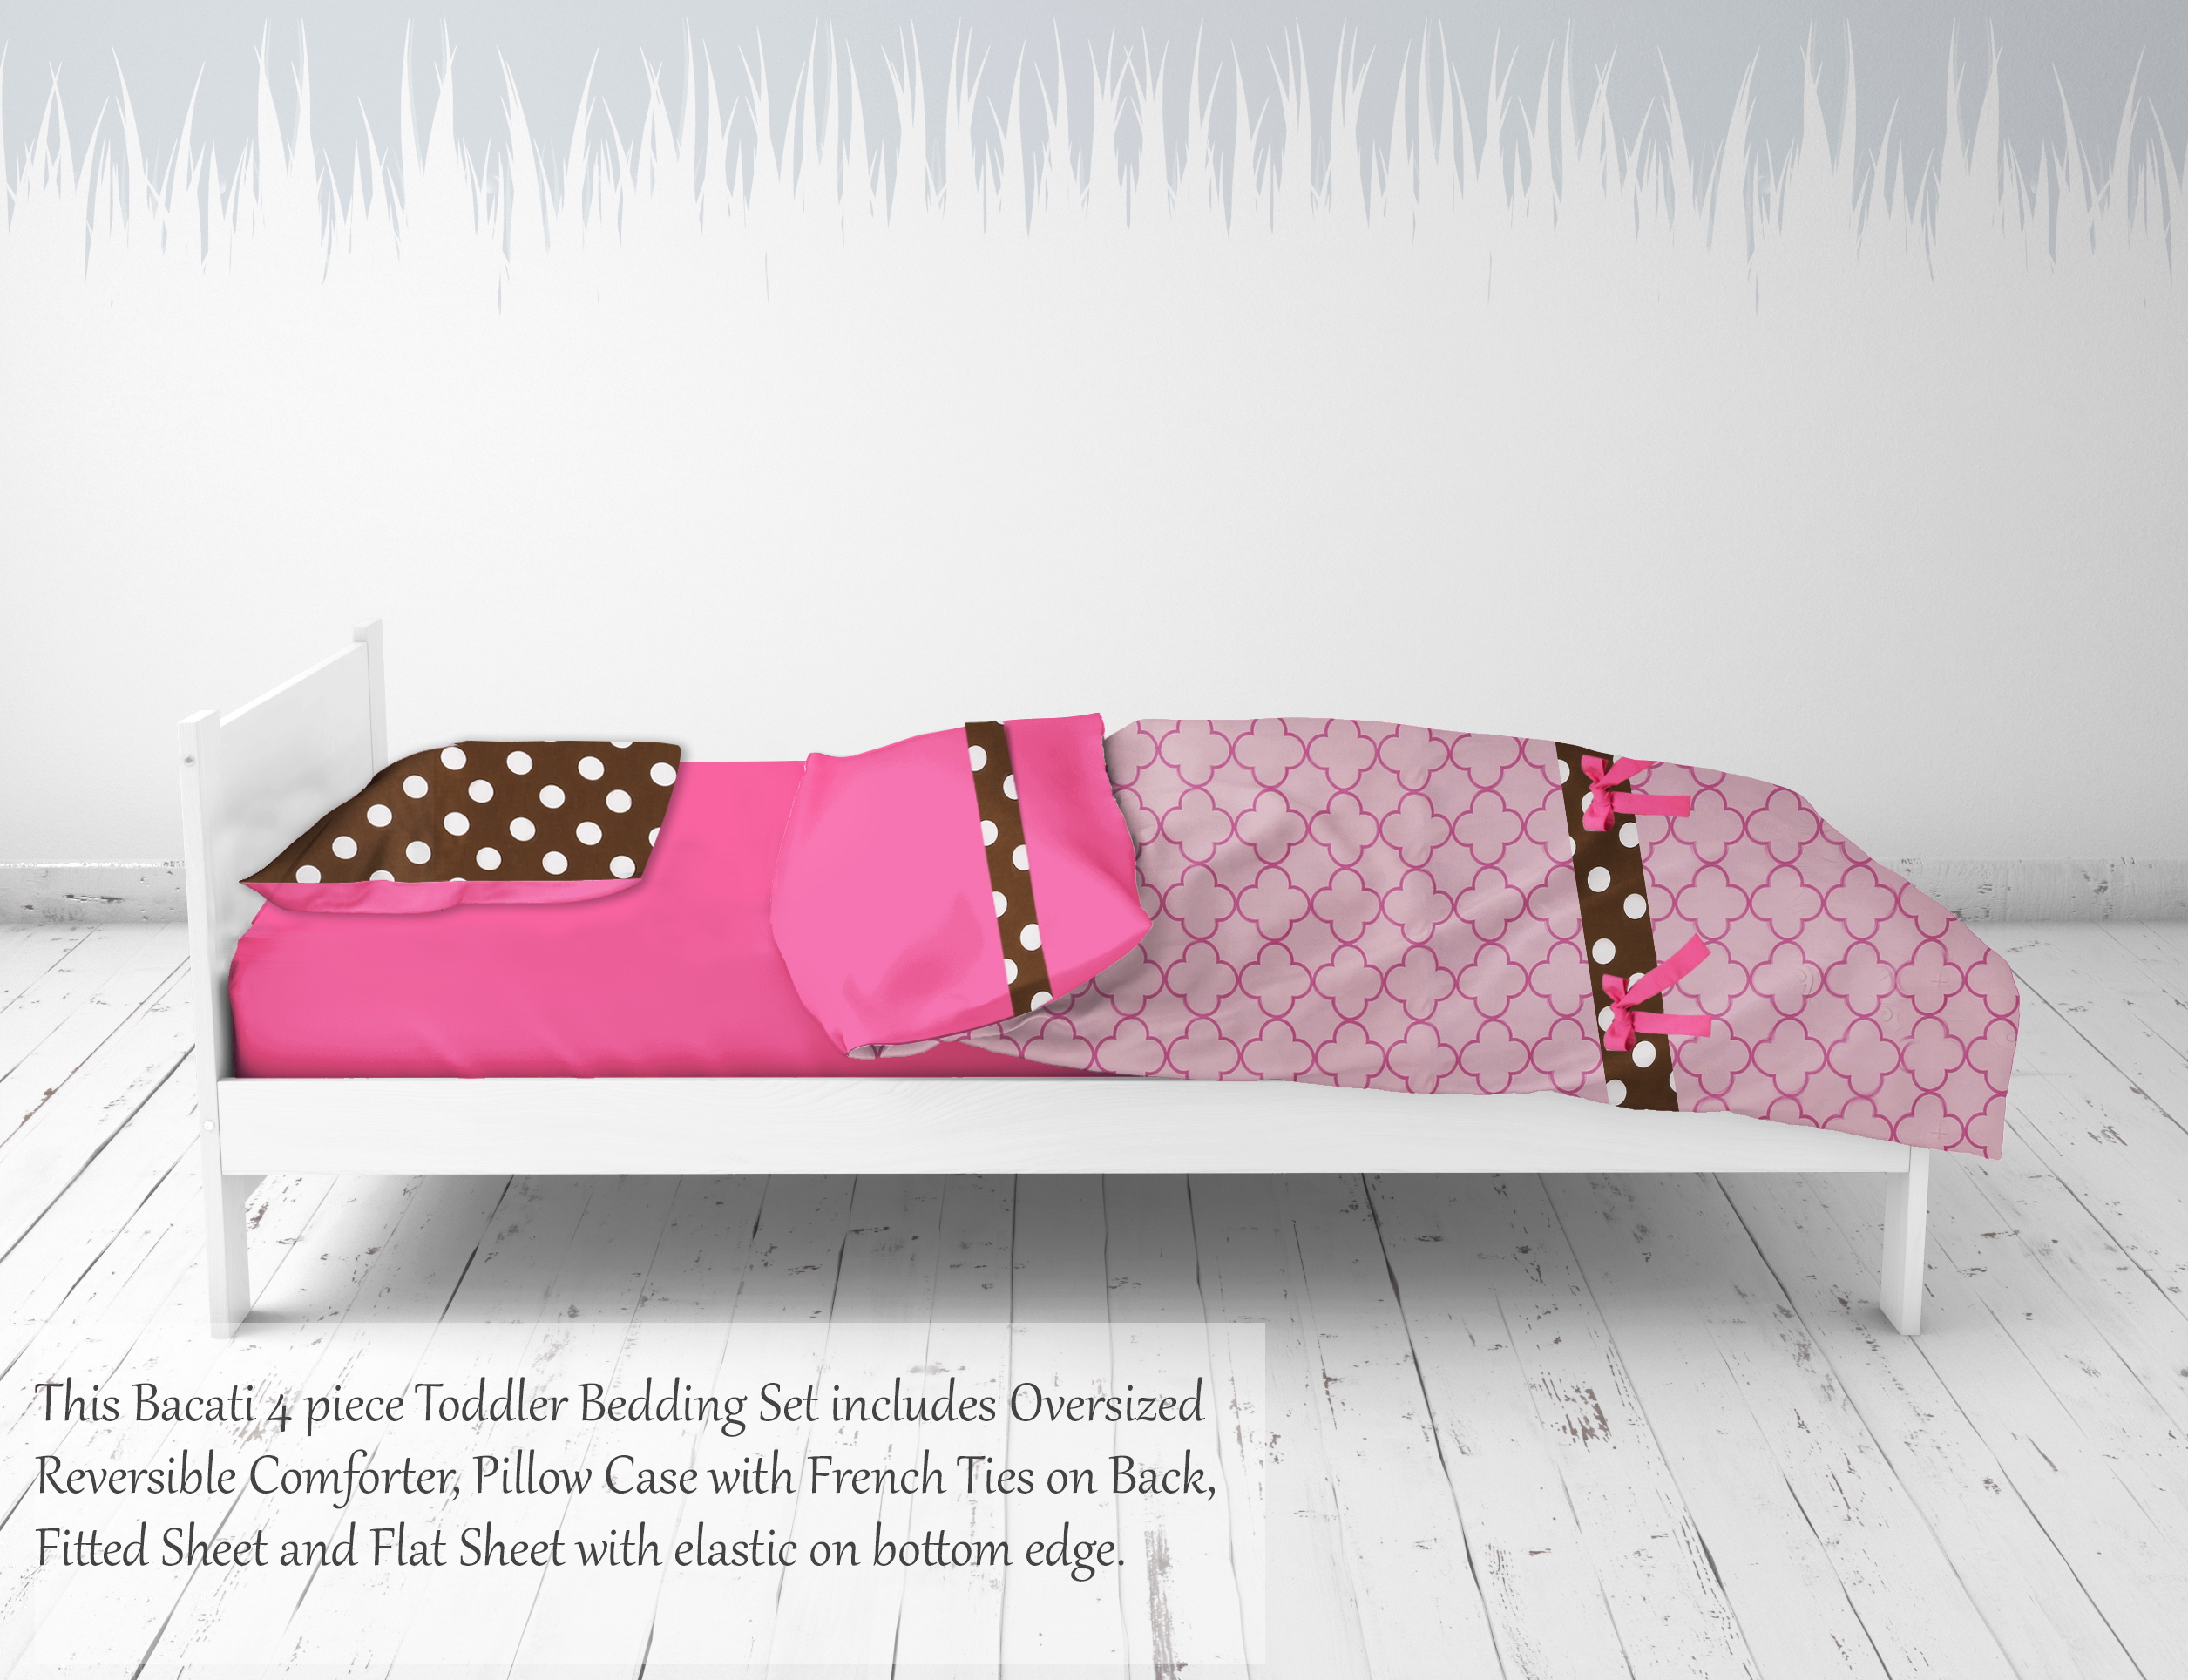 Bacati 4-Pc Toddler Bedding Set Butterflies Pink/Choc, 4.0 PIECE(S) - image 2 of 4